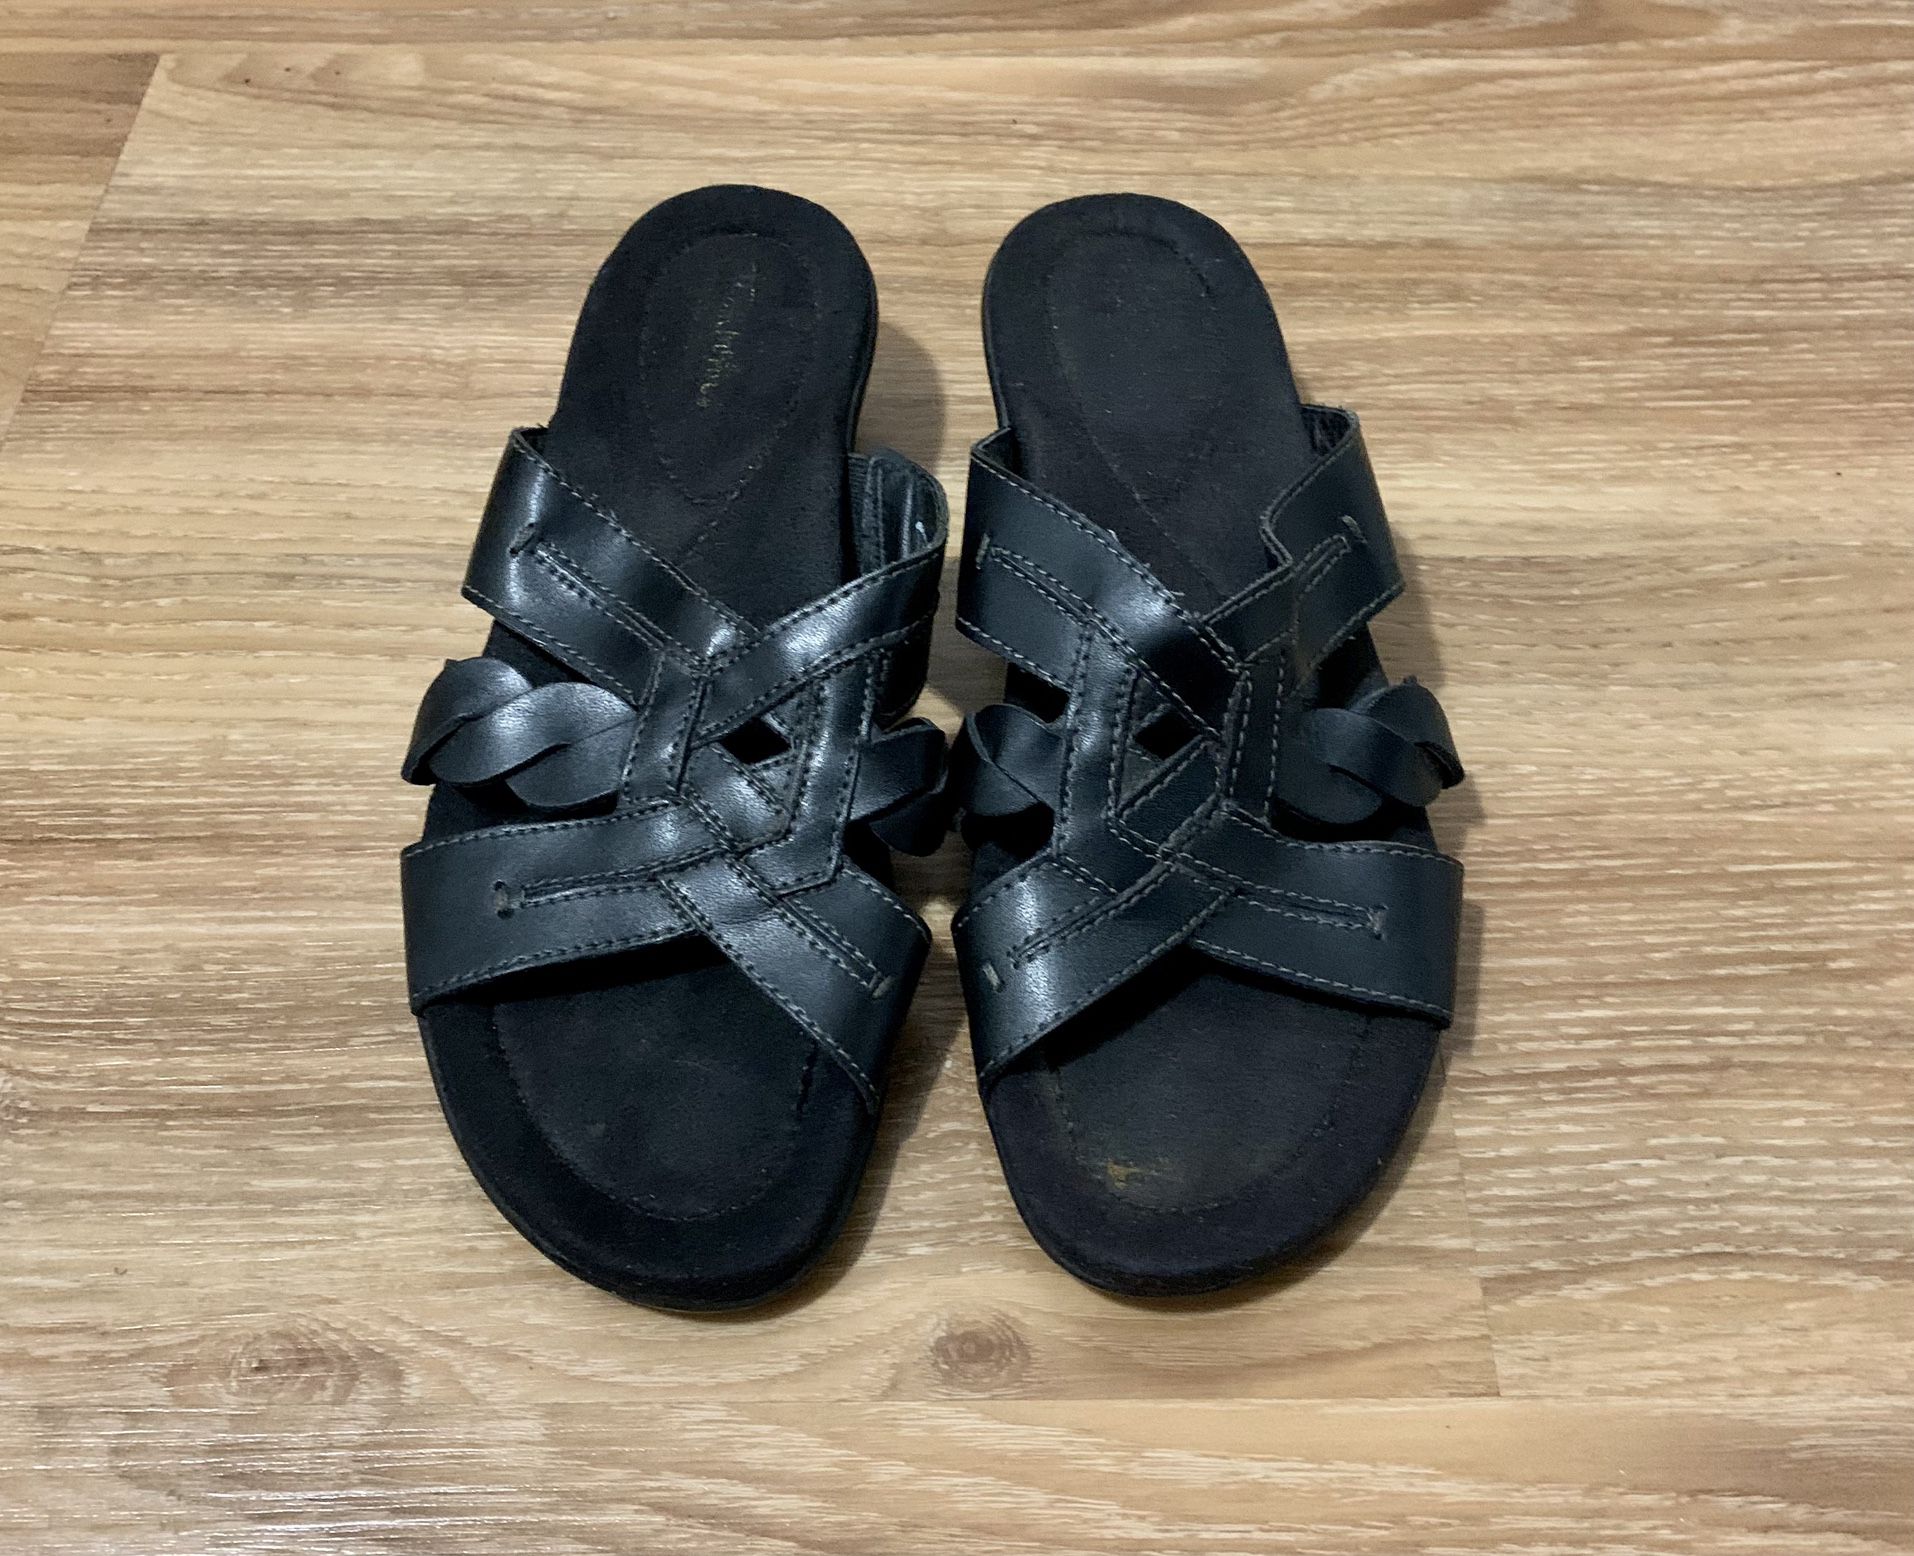 Willa Flats Sandal Size 7.5